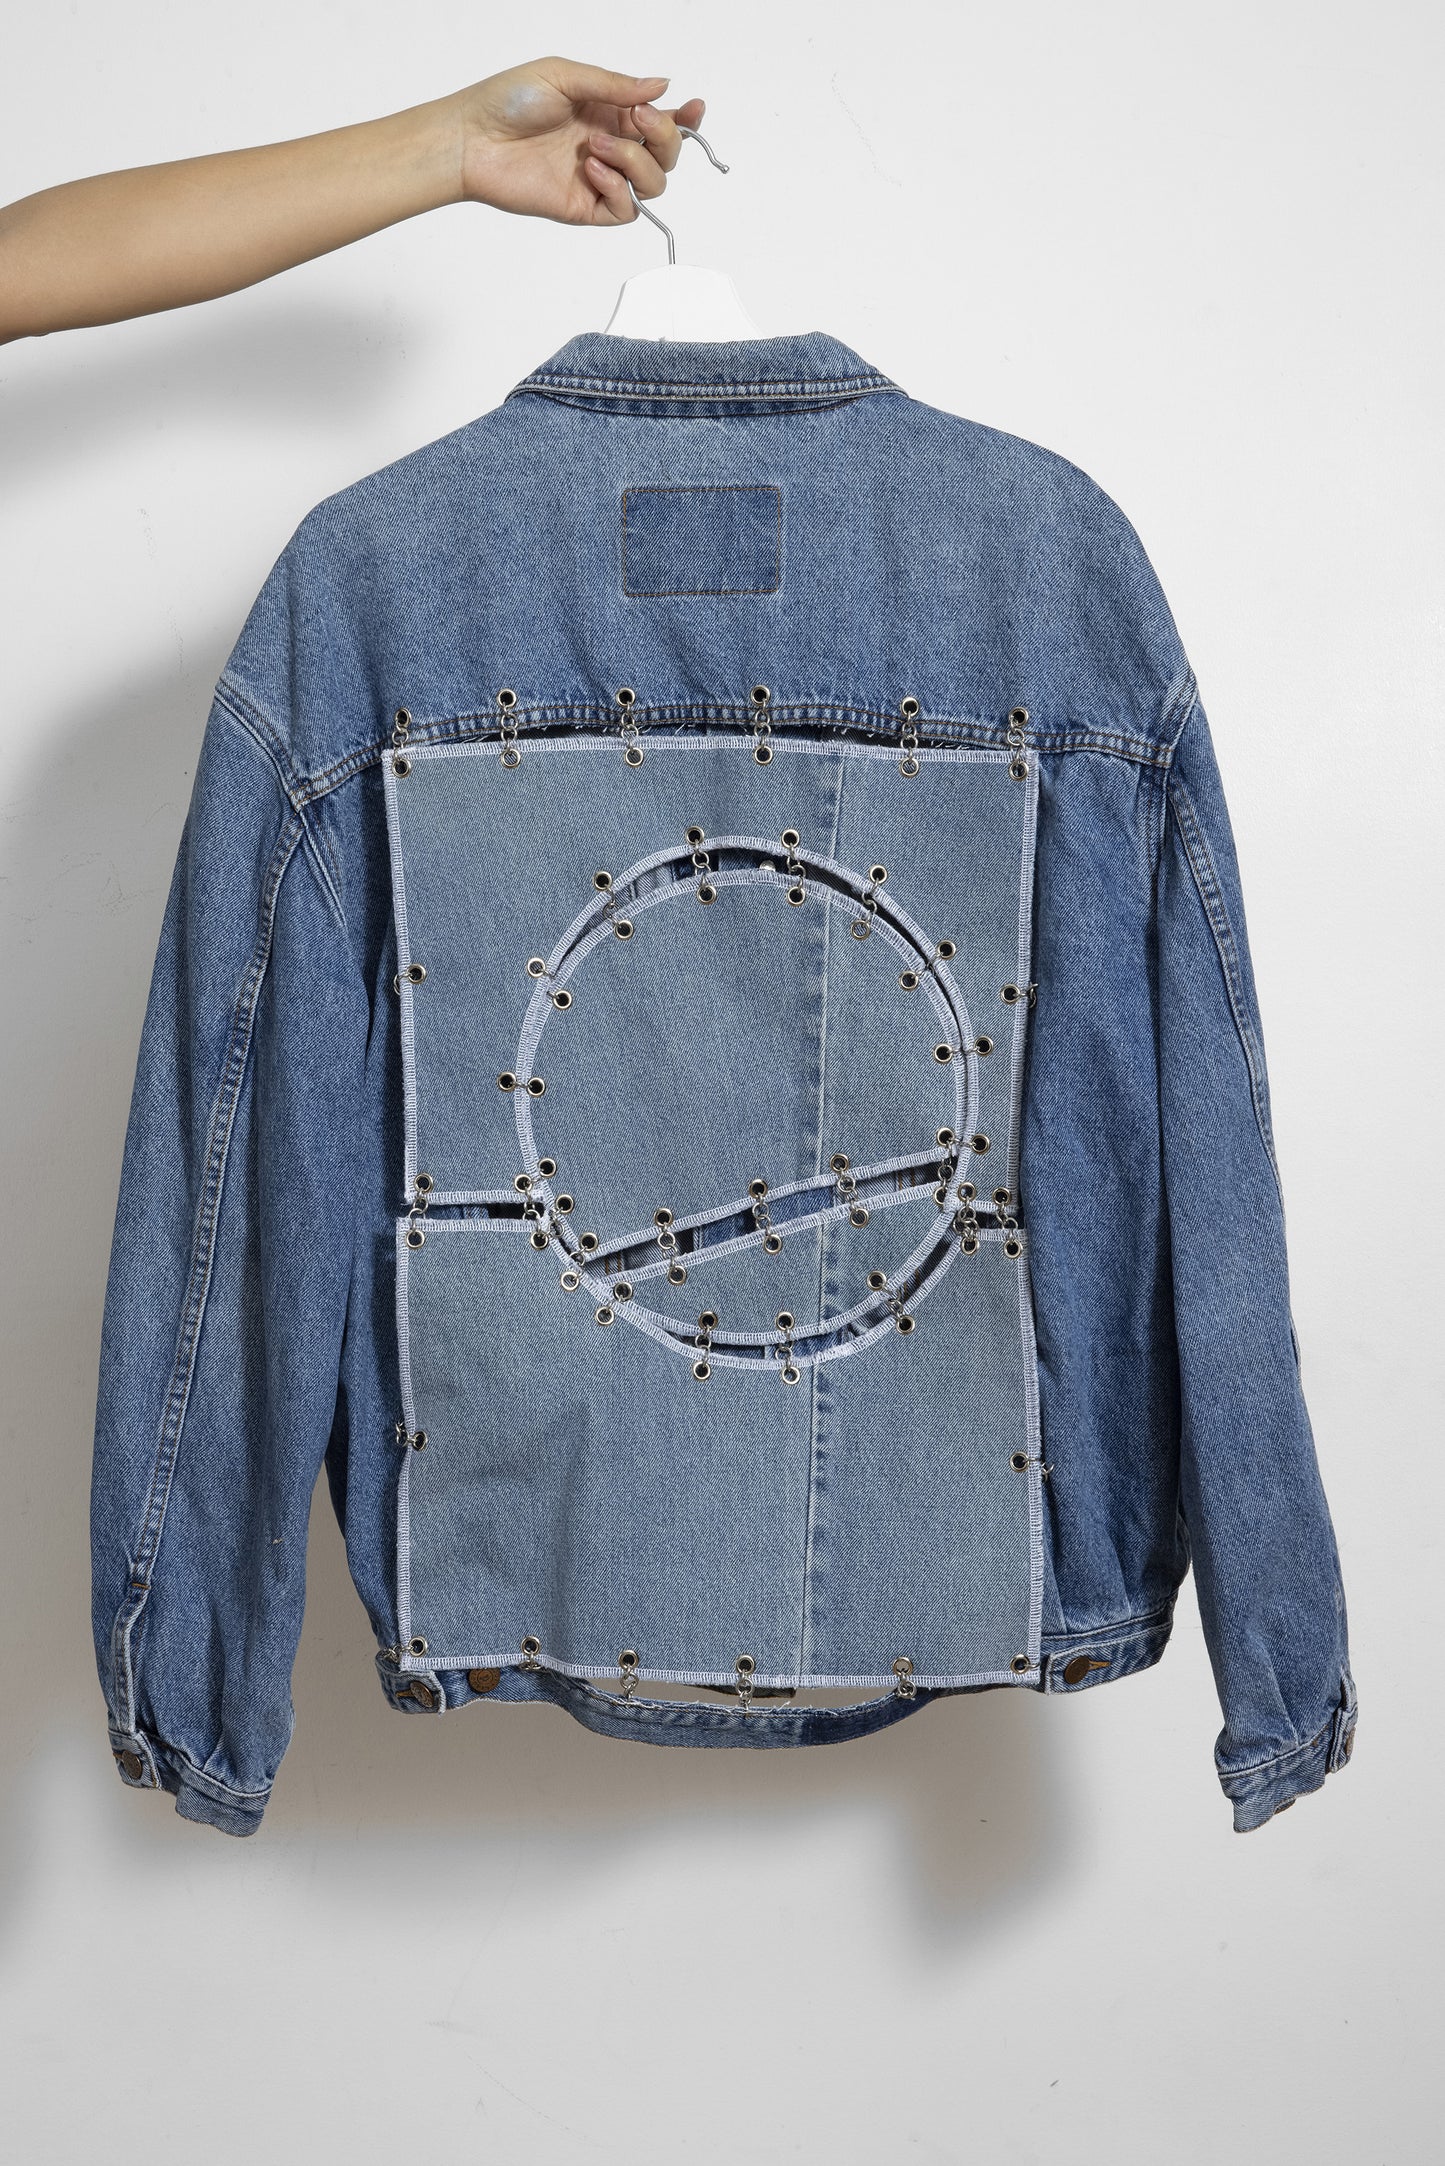 THE EXPERIMENT Denim jacket 02 - Circle squared